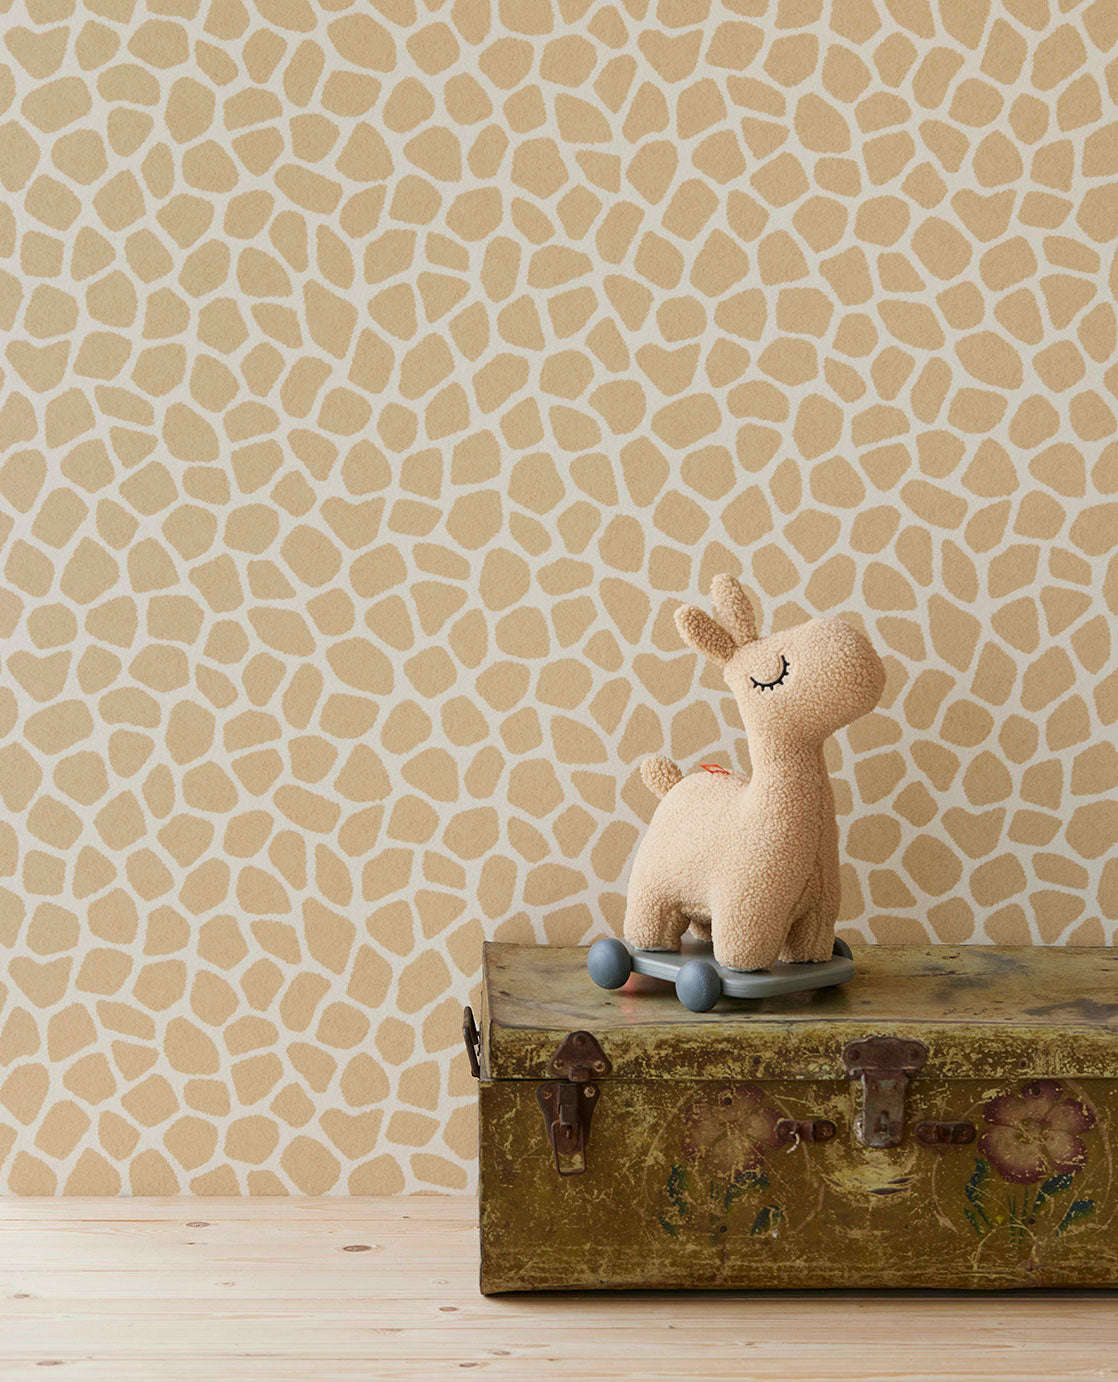 Explore Giraffe Patterned wallpaper